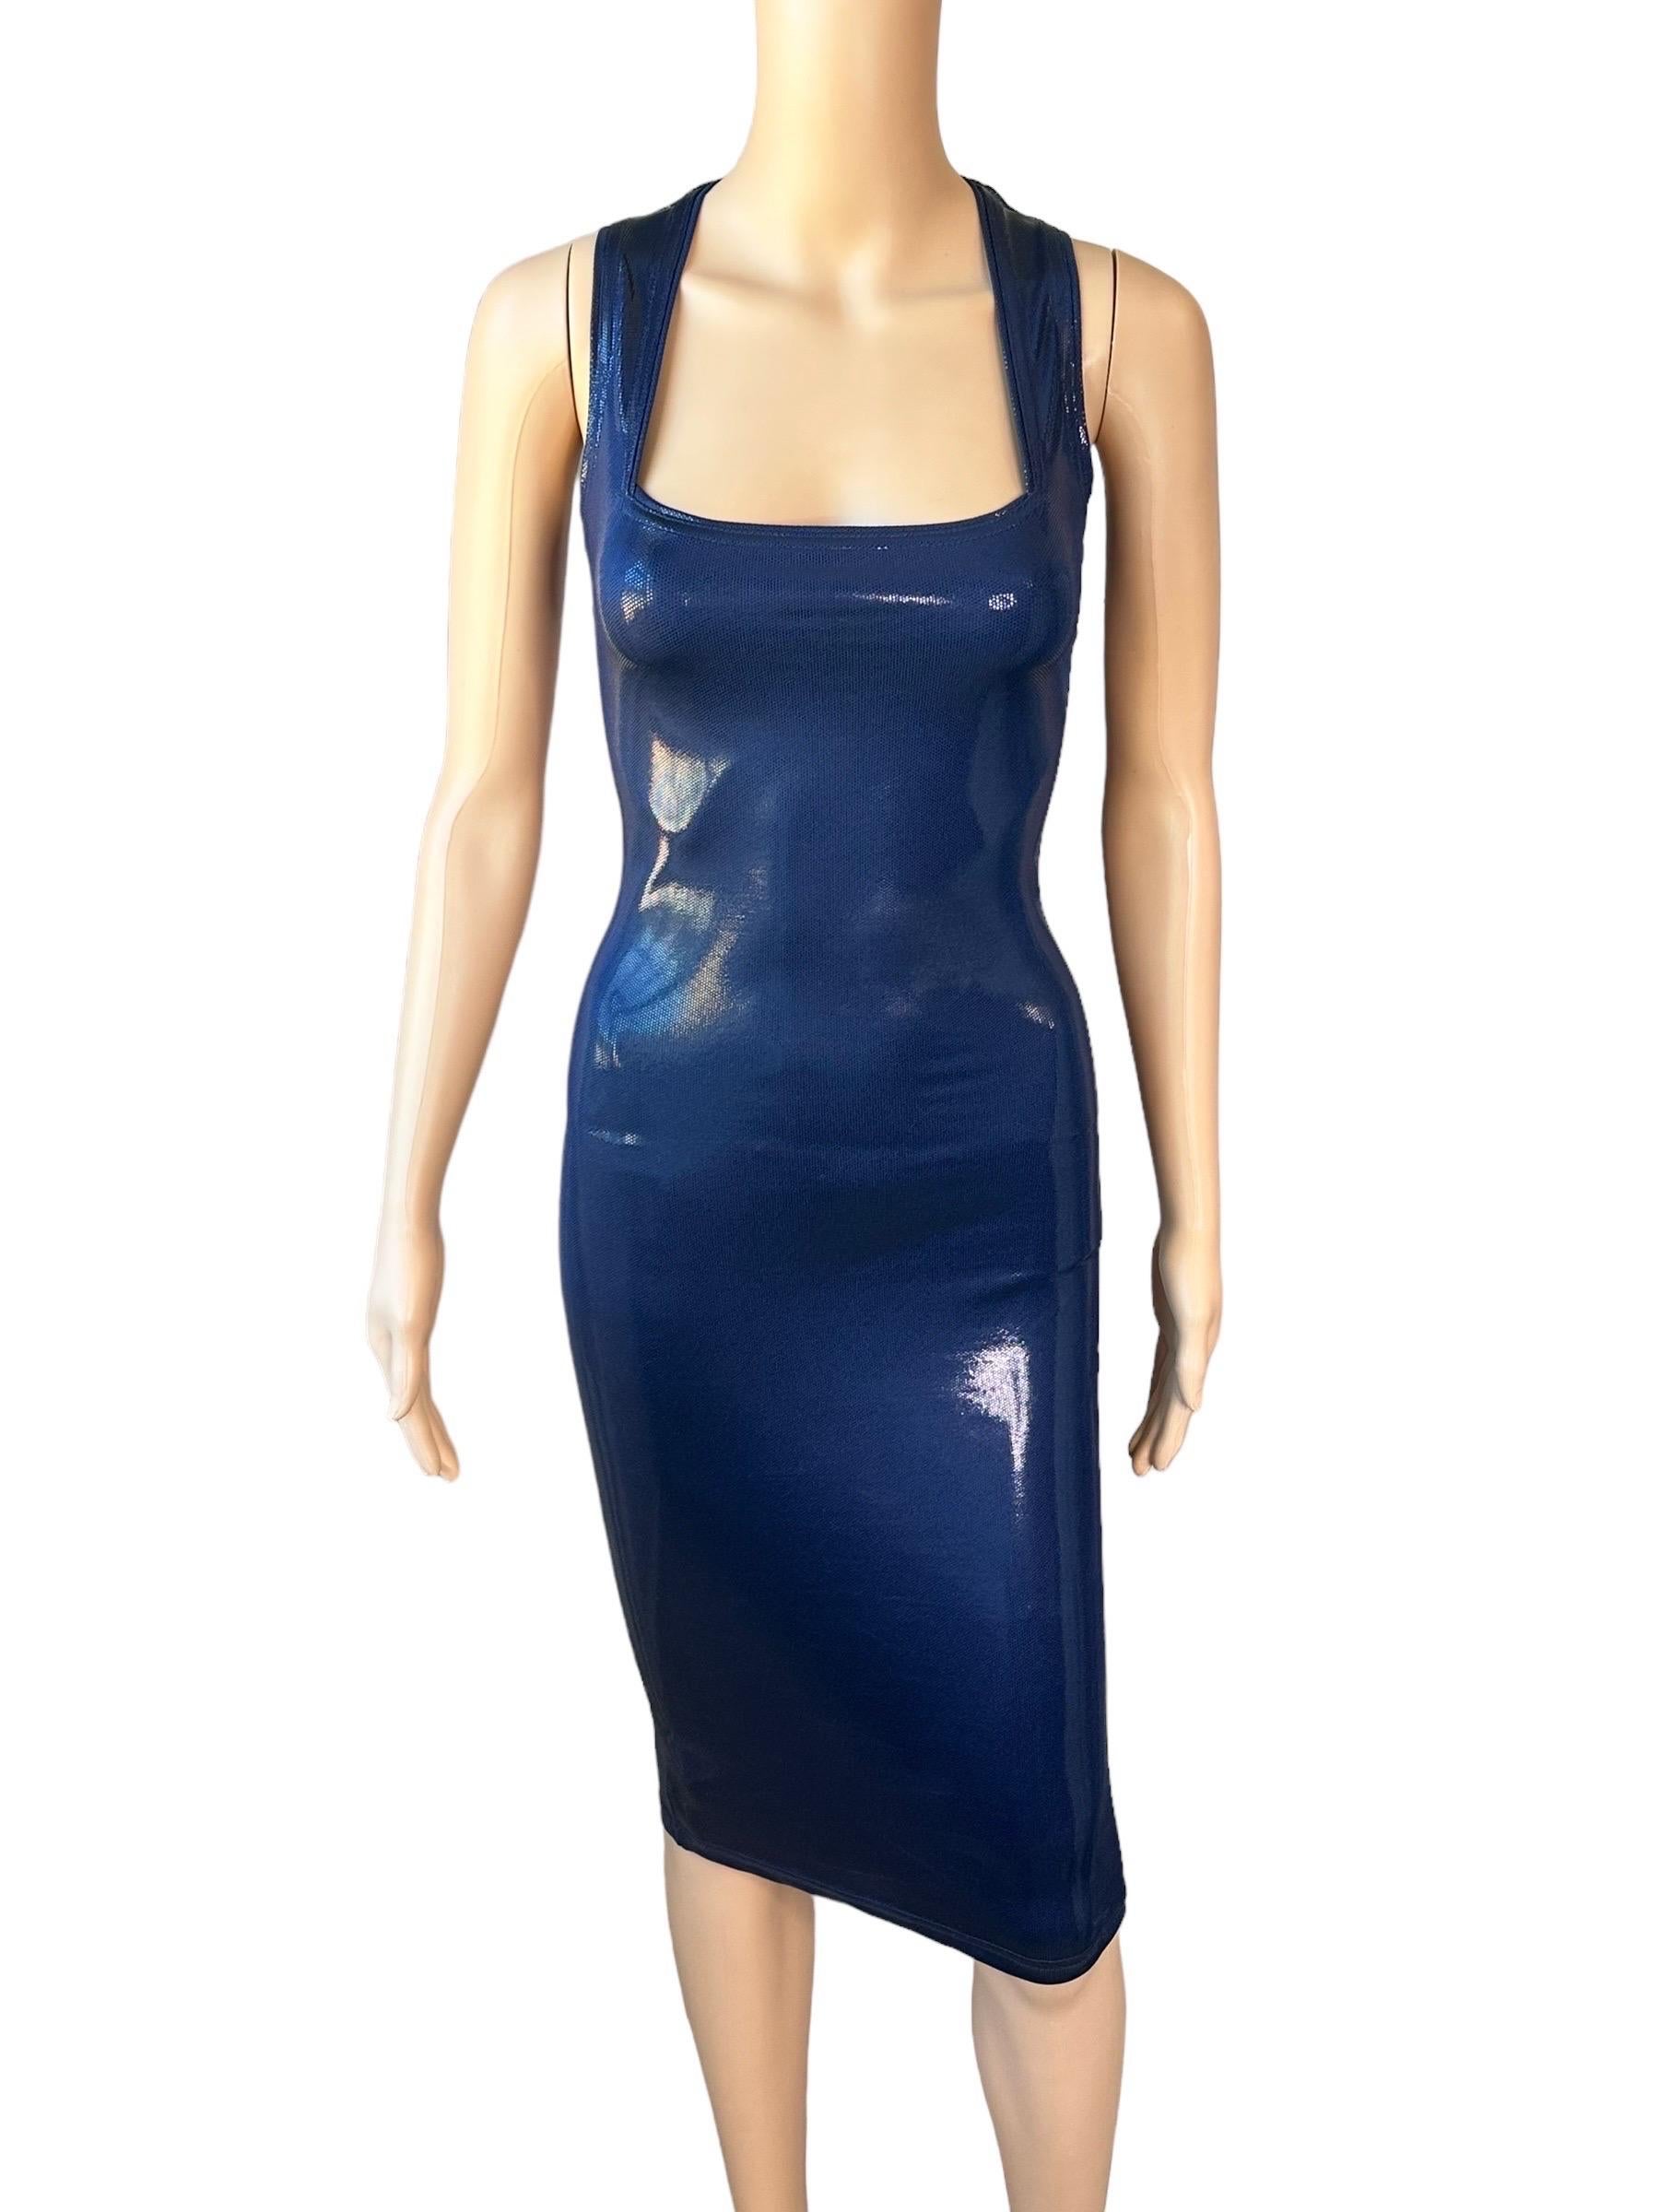 Gianni Versace c. 1994 Vintage Wet Look Stretch Bodycon Navy Blue Midi Dress IT 42